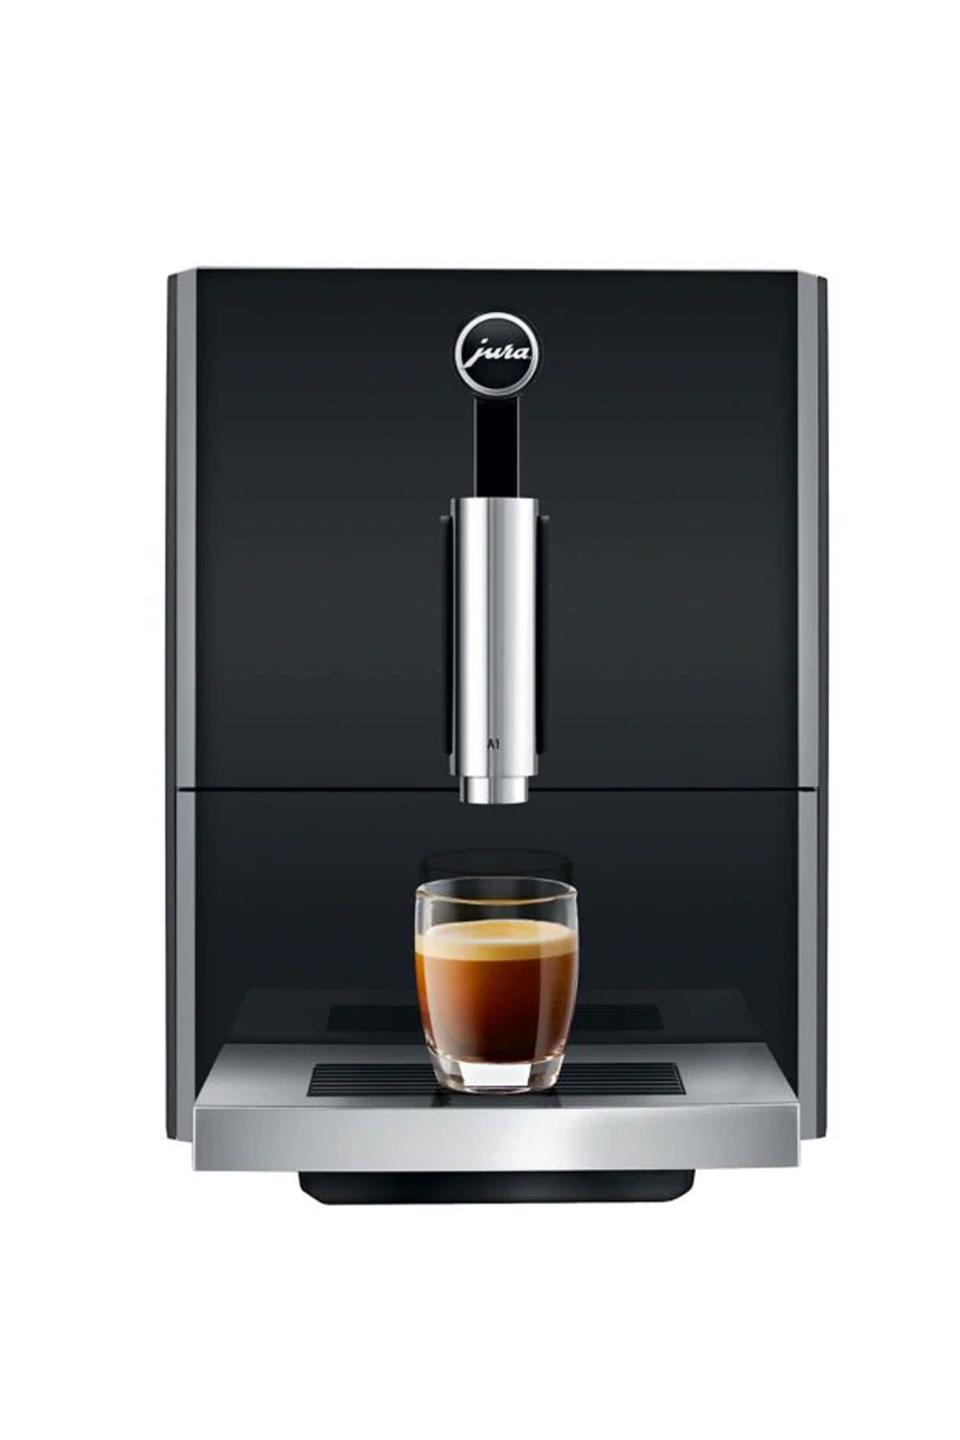 4) Jura A1 Fully Automatic Coffee Machine